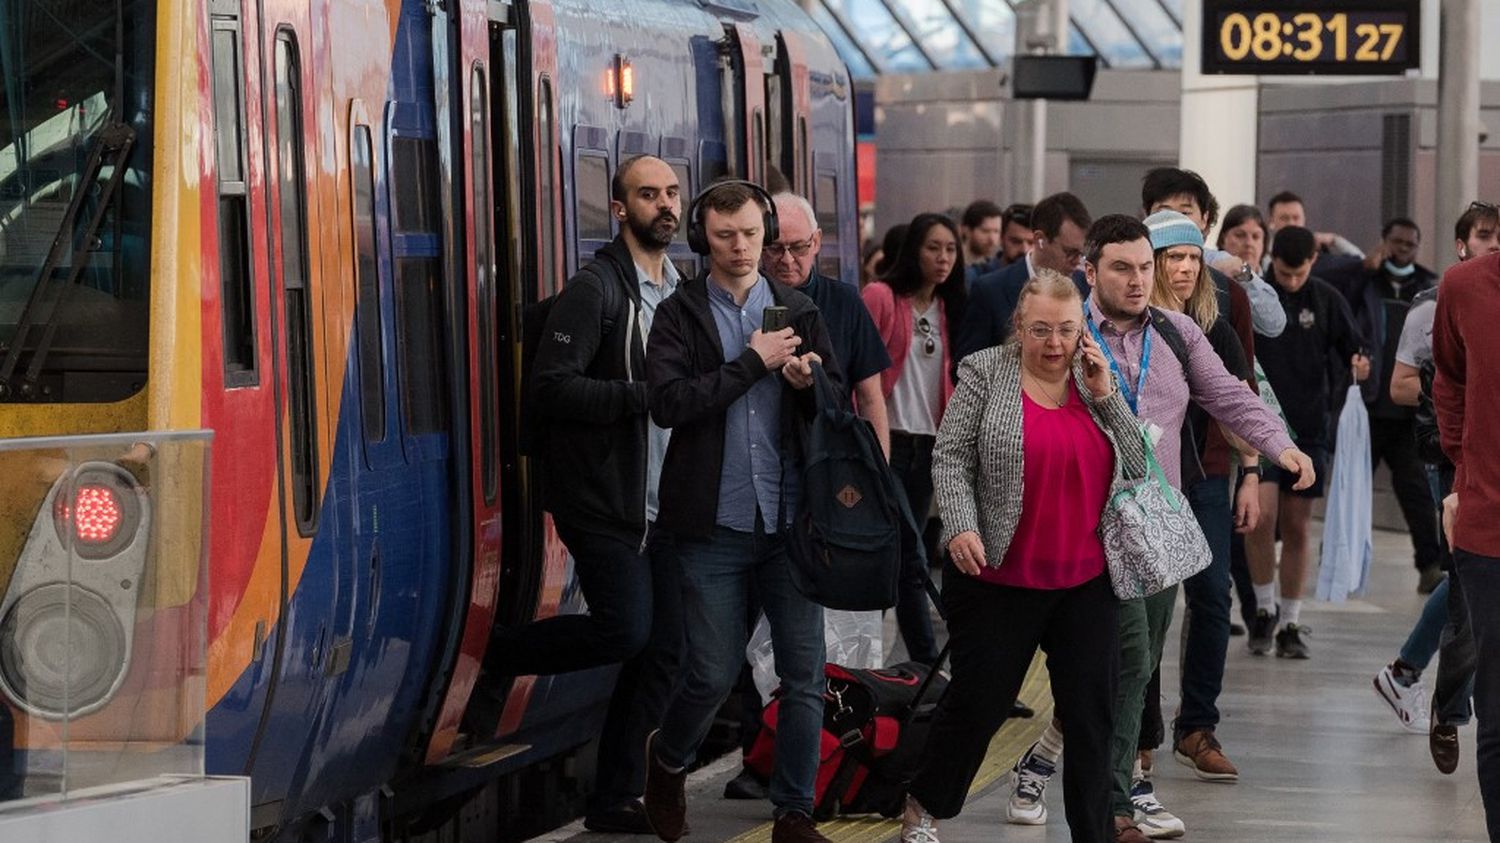 UK: Railway workers launch biggest strike in 30 years
